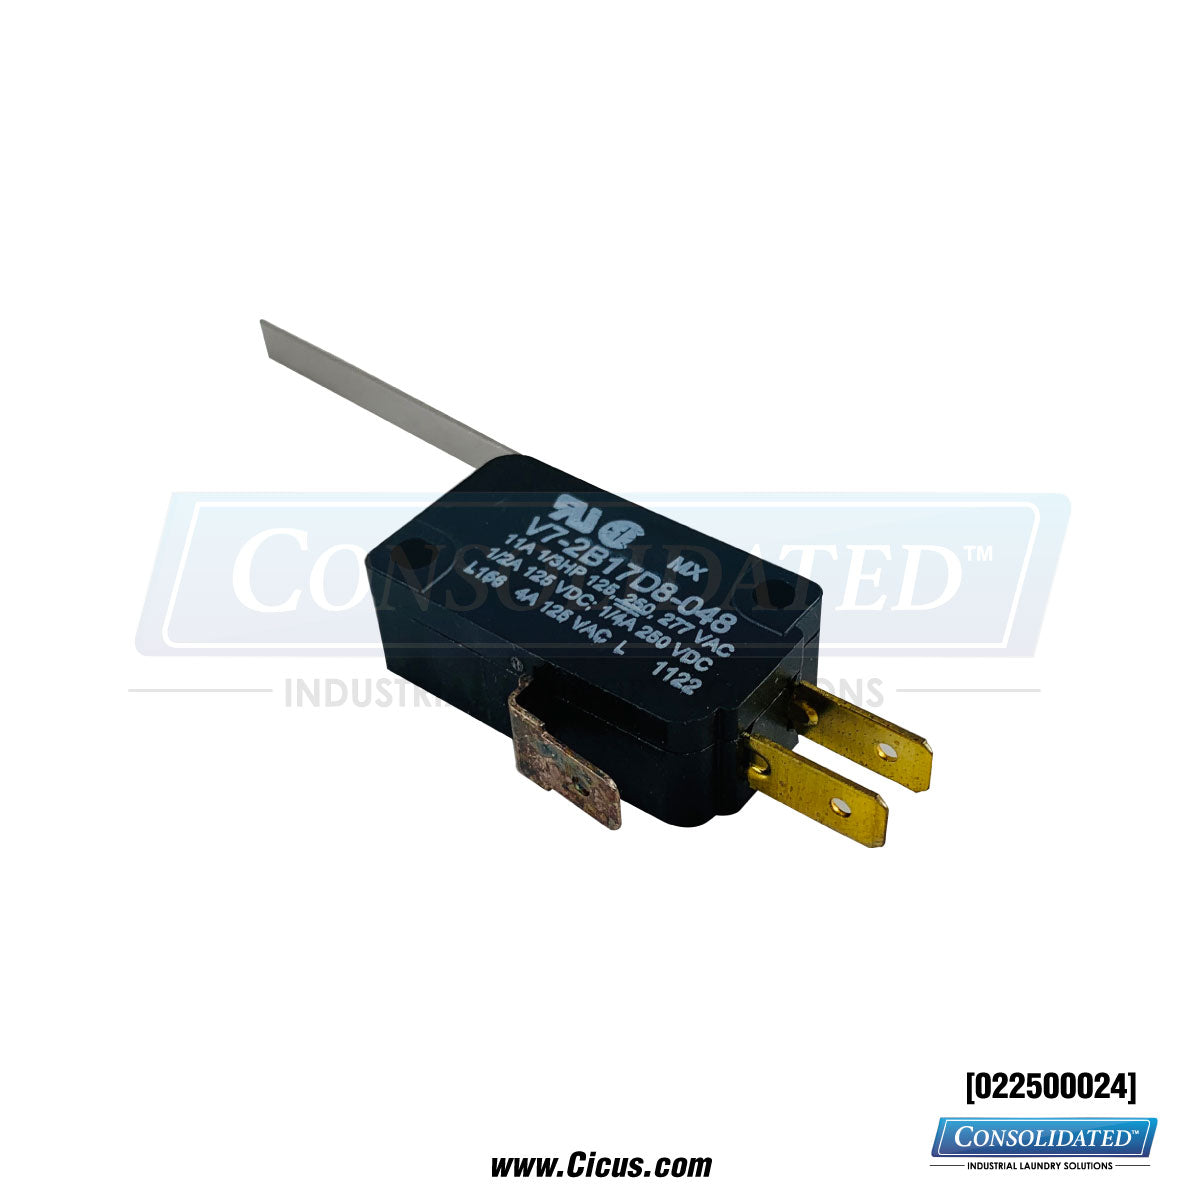 GA Braun Switch - Micro Safety +1/1/88 V3L 40-130-S [022500024]